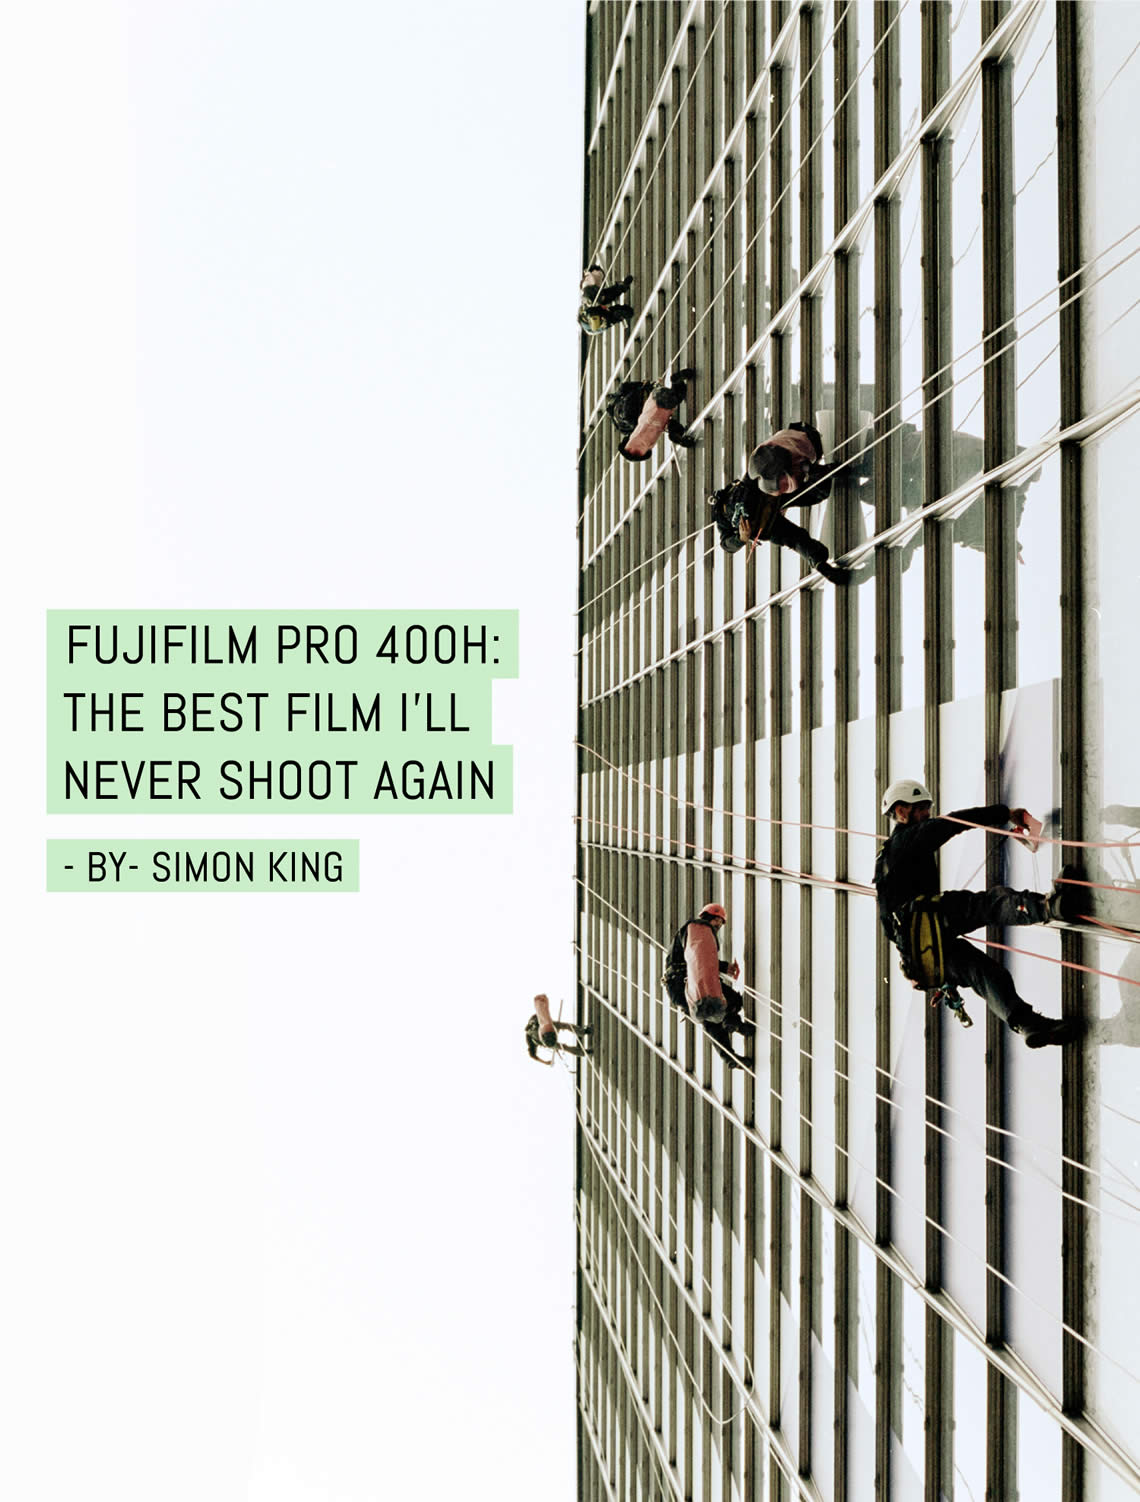 Fujifilm Pro 400H, the best film I'll never shoot again - by Simon King